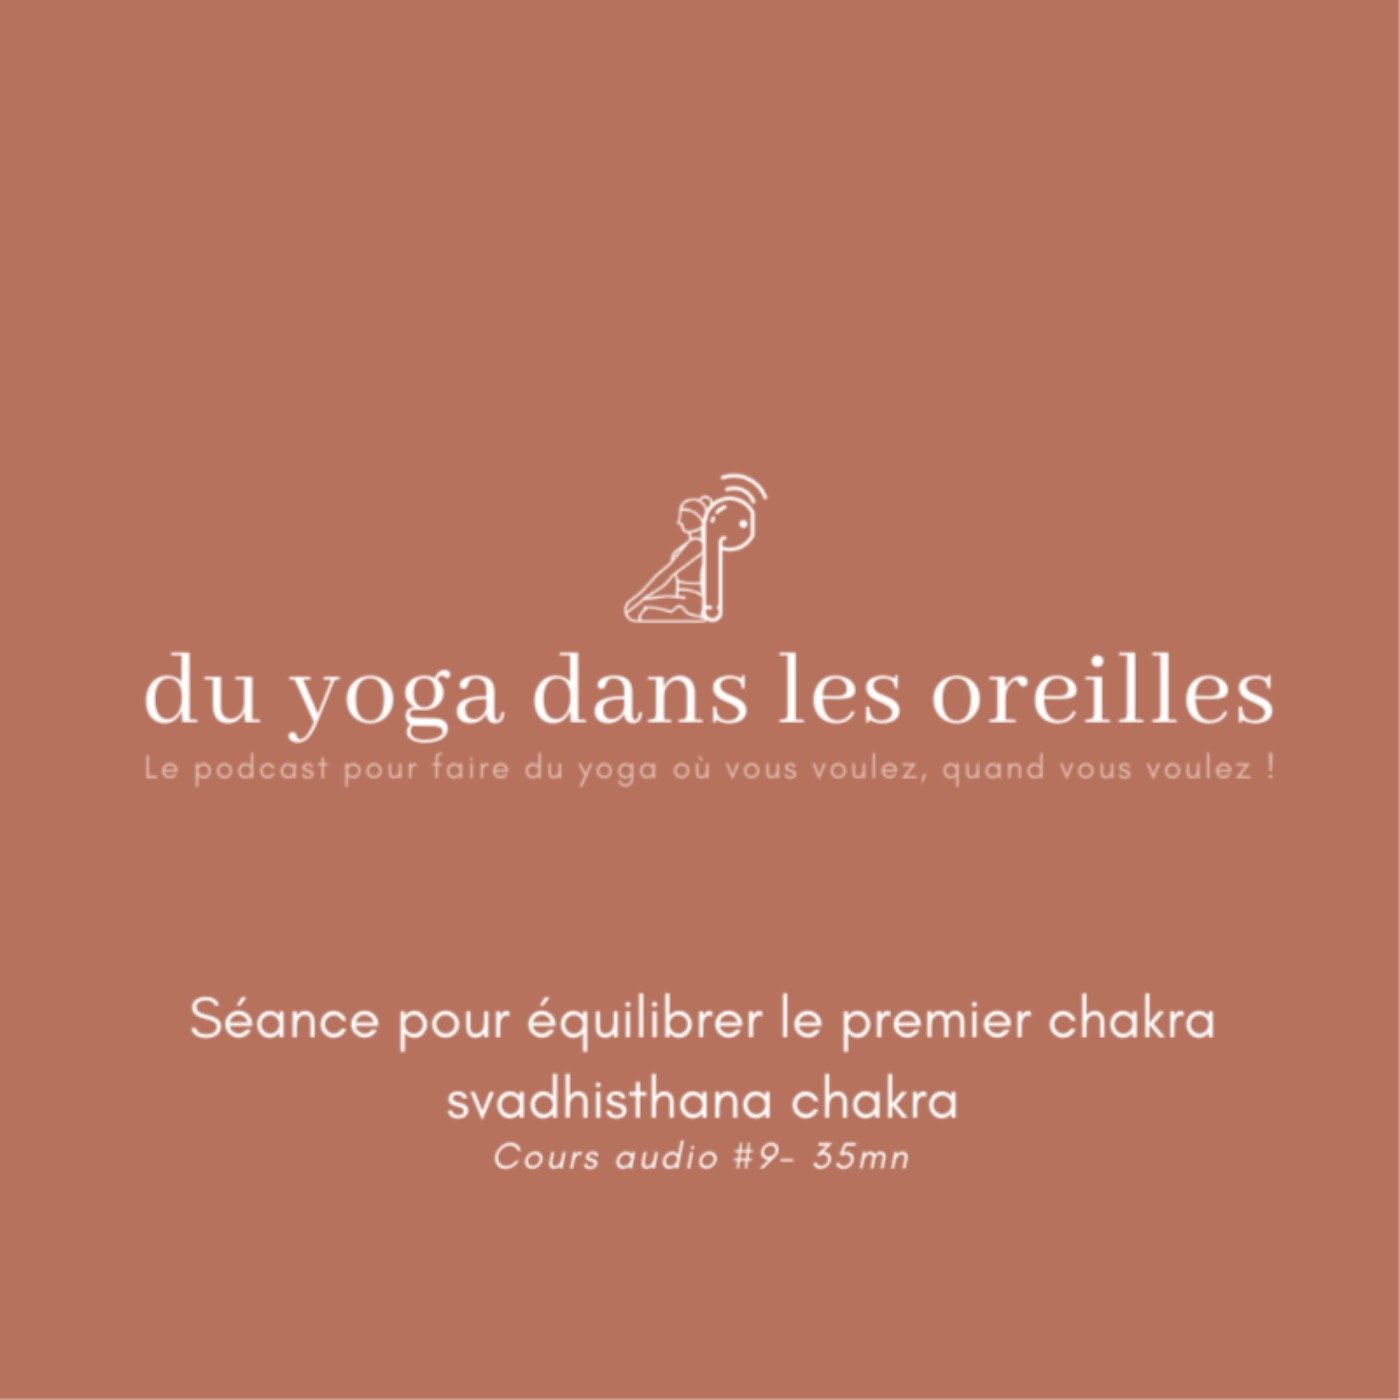 Cours de yoga vinyasa pour équilibrer svadhisthana chakra